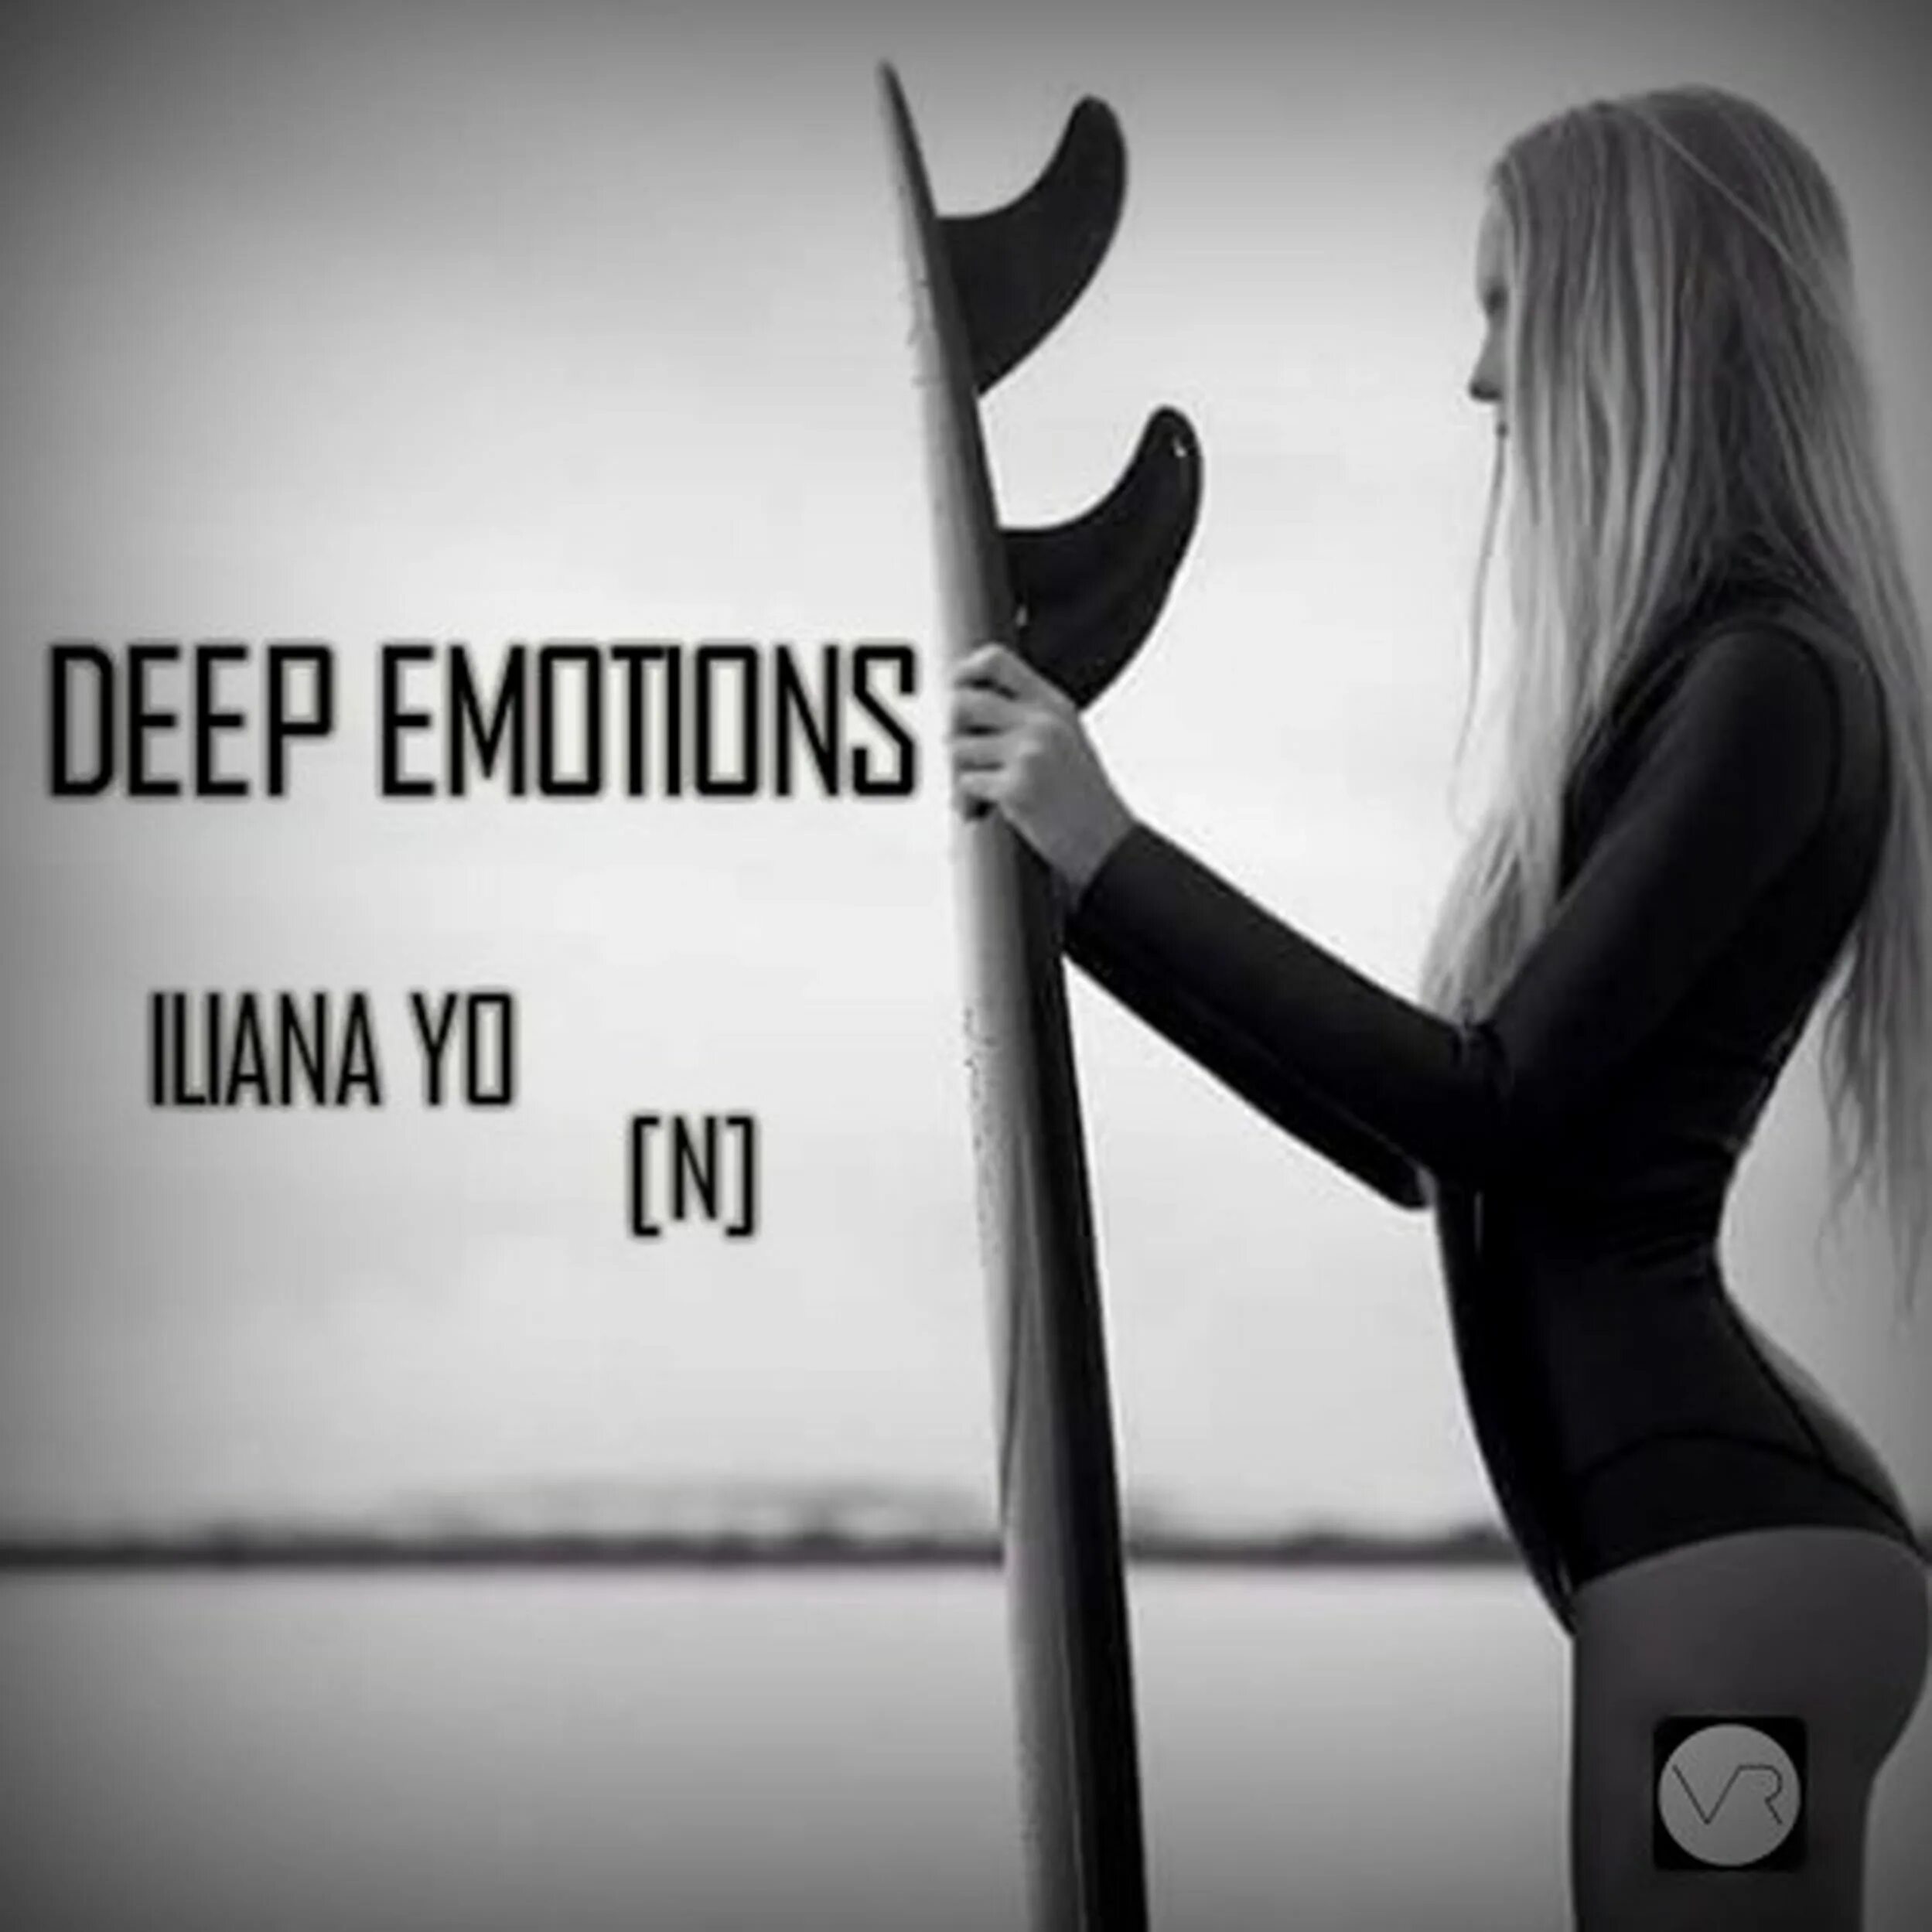 Deep House emotion абстрактные. 100 Reasons Deep emotion. Deep emotion everything. Deep Liquid Music indie Dance. Dj tank